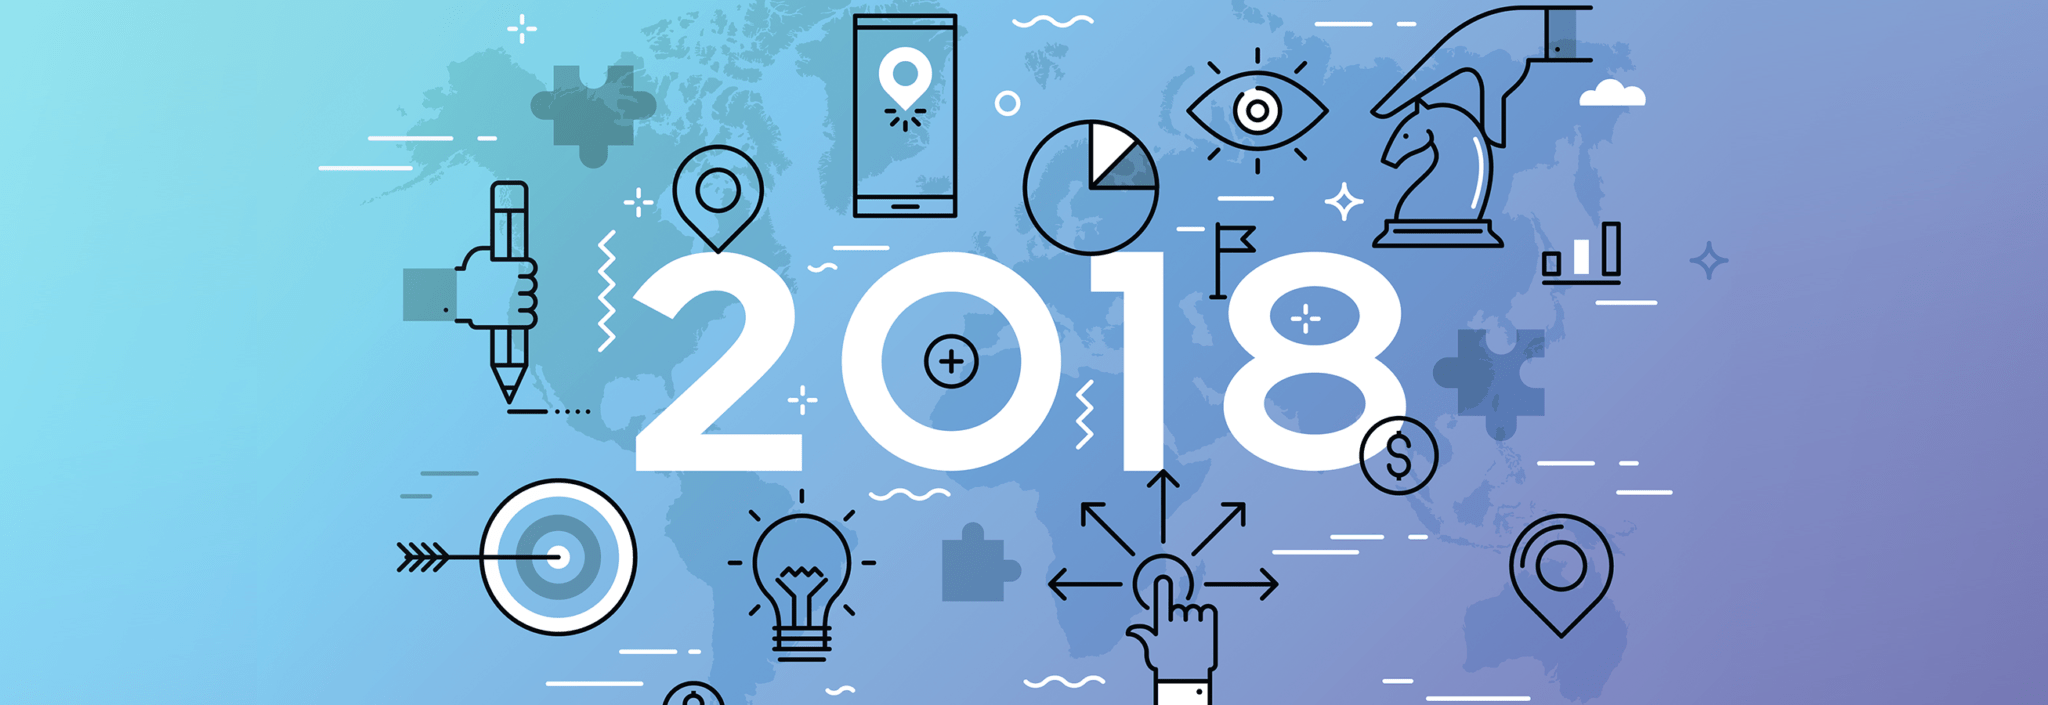 Top 3 Digital Marketing Trends for 2018